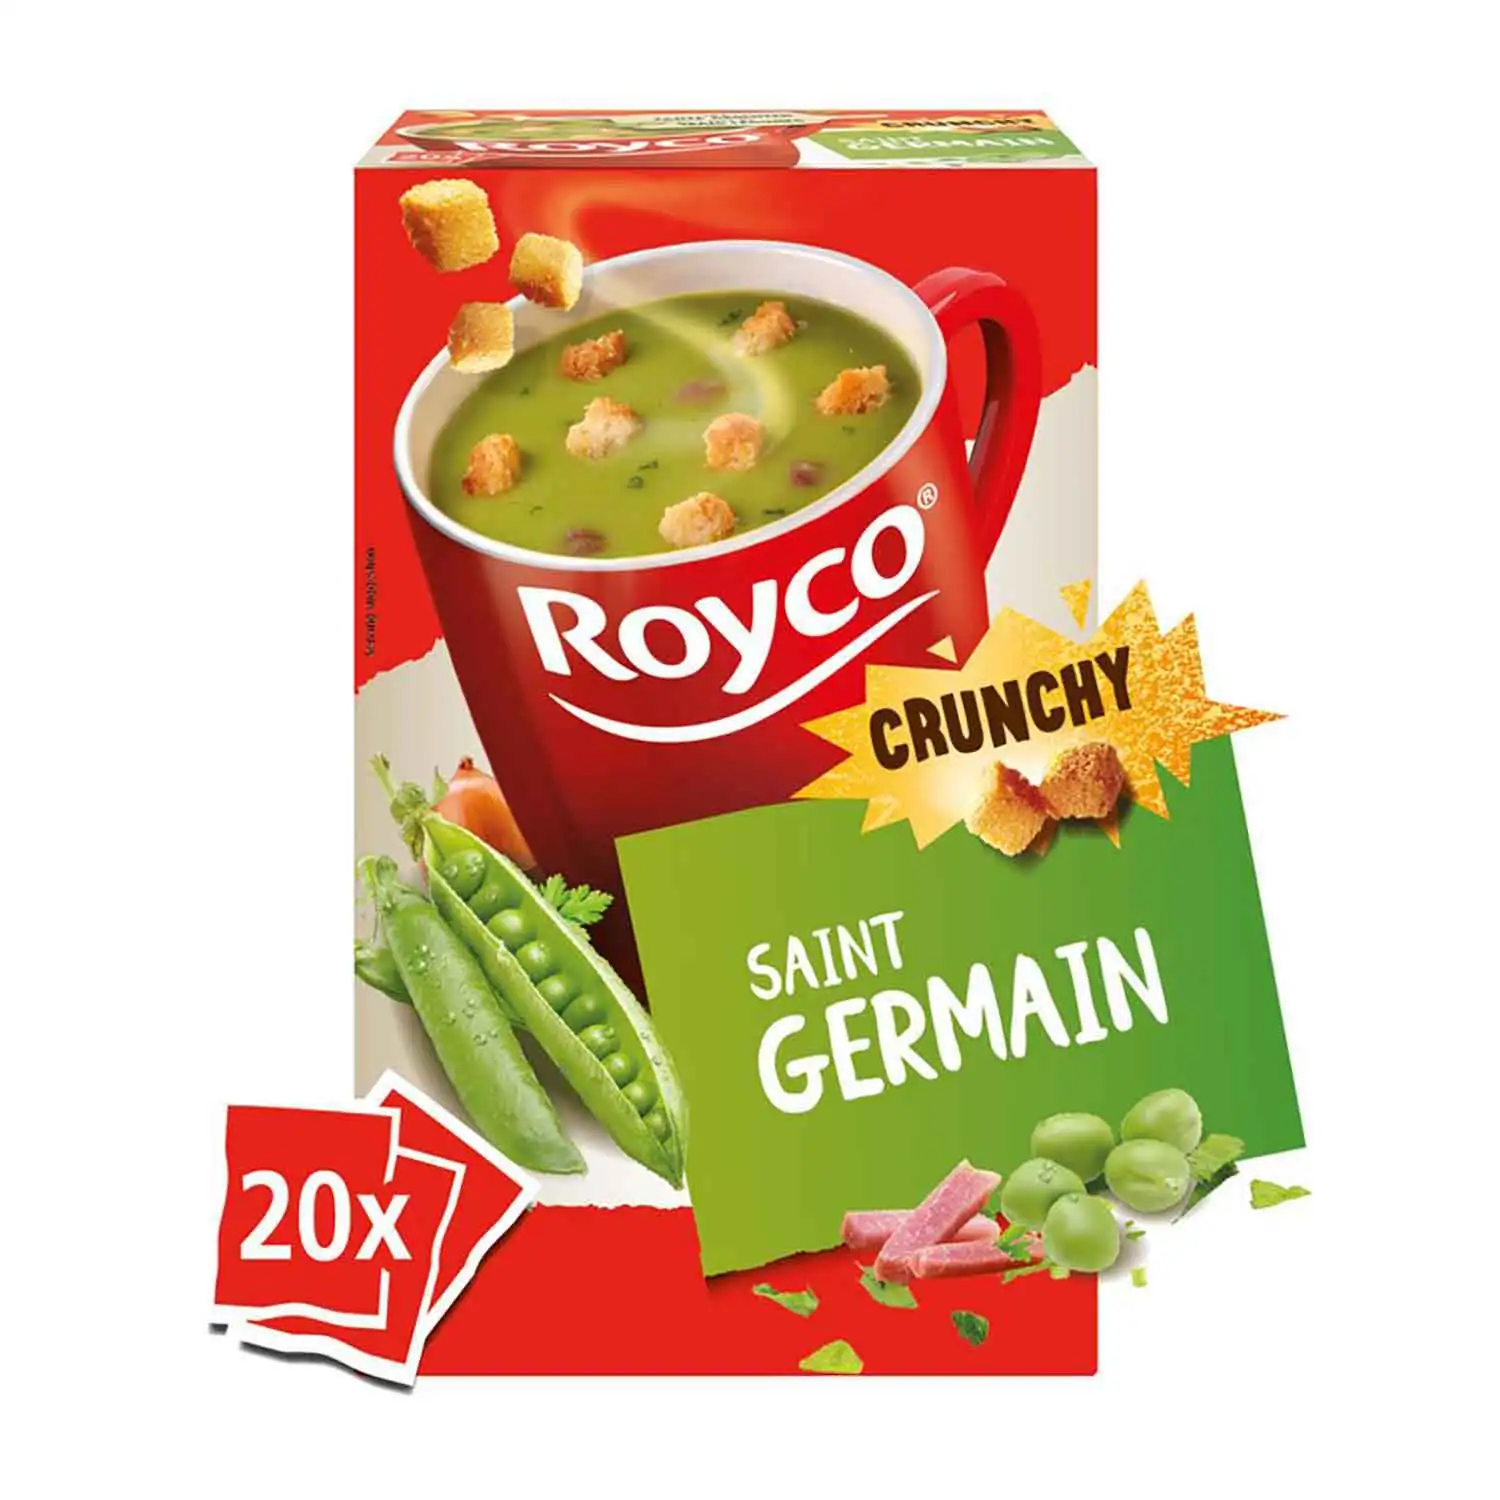 20x Royco crunchy St. Germain 24,2g - Buy at Real Tobacco